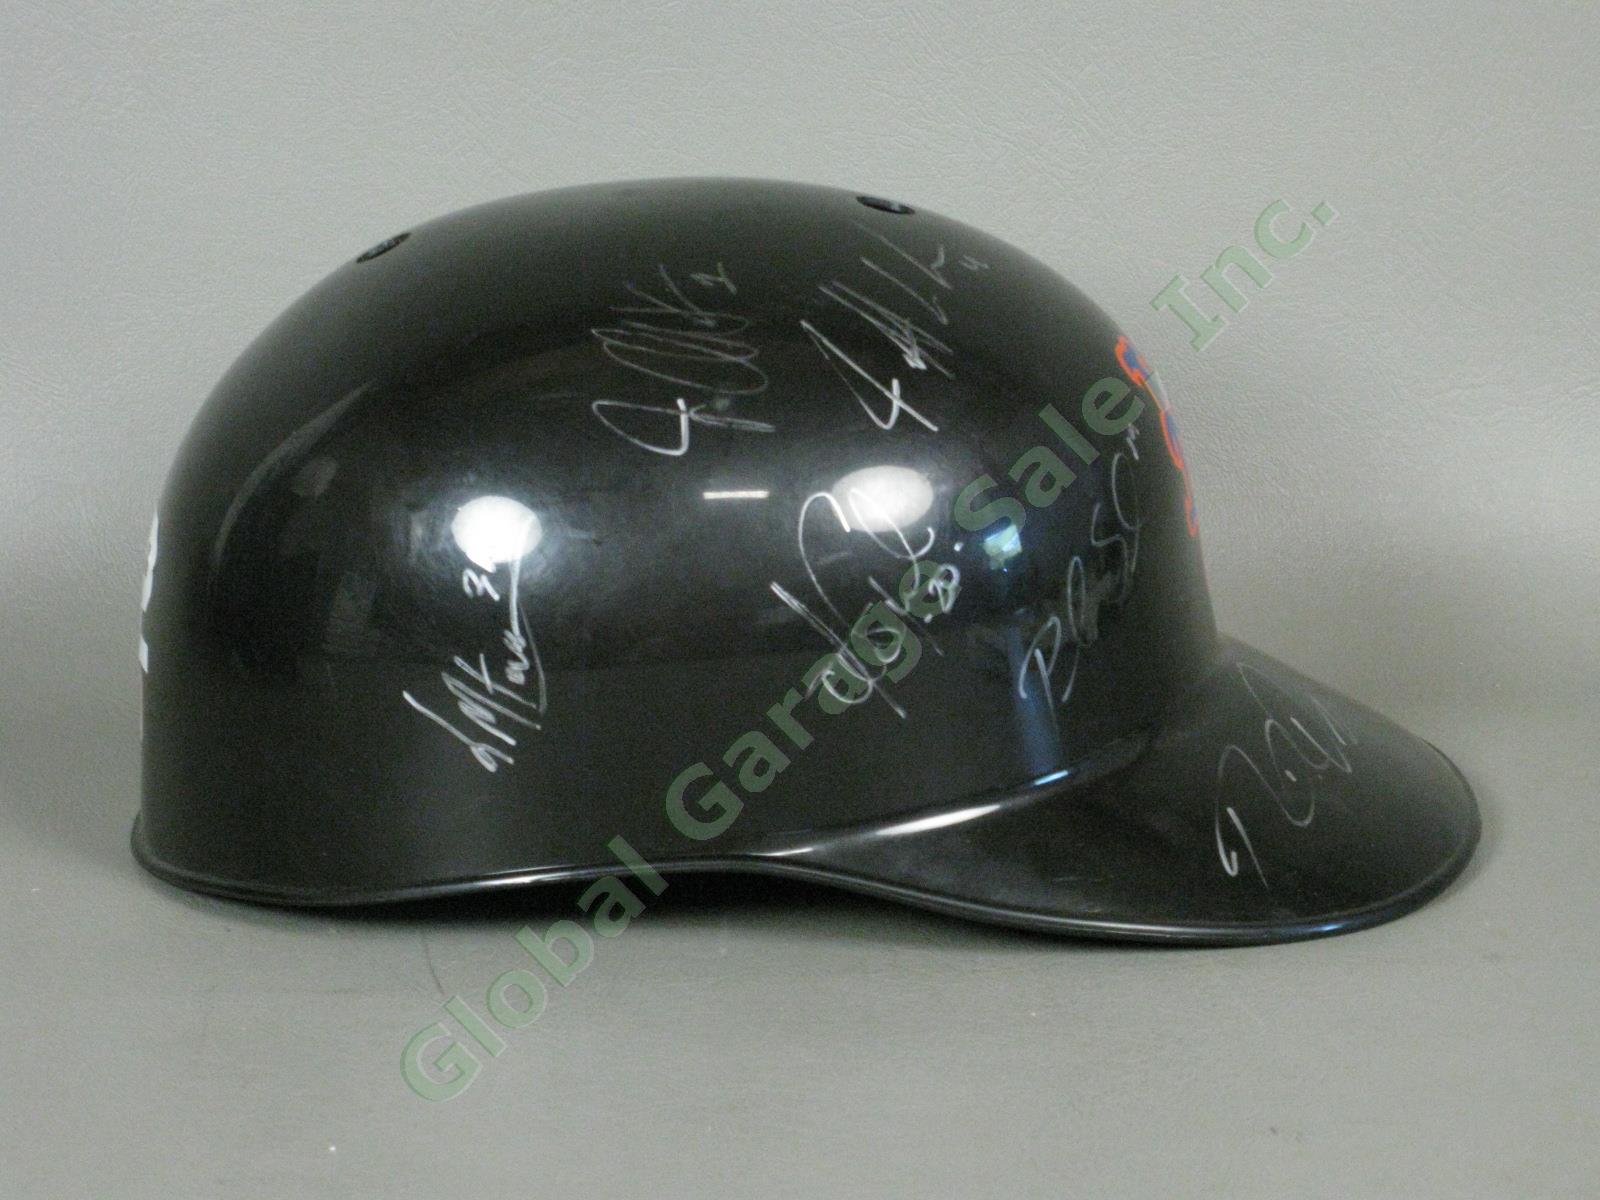 2012 Brooklyn Cyclones Team Signed Baseball Helmet MiLB MLB NYPL New York Mets 1